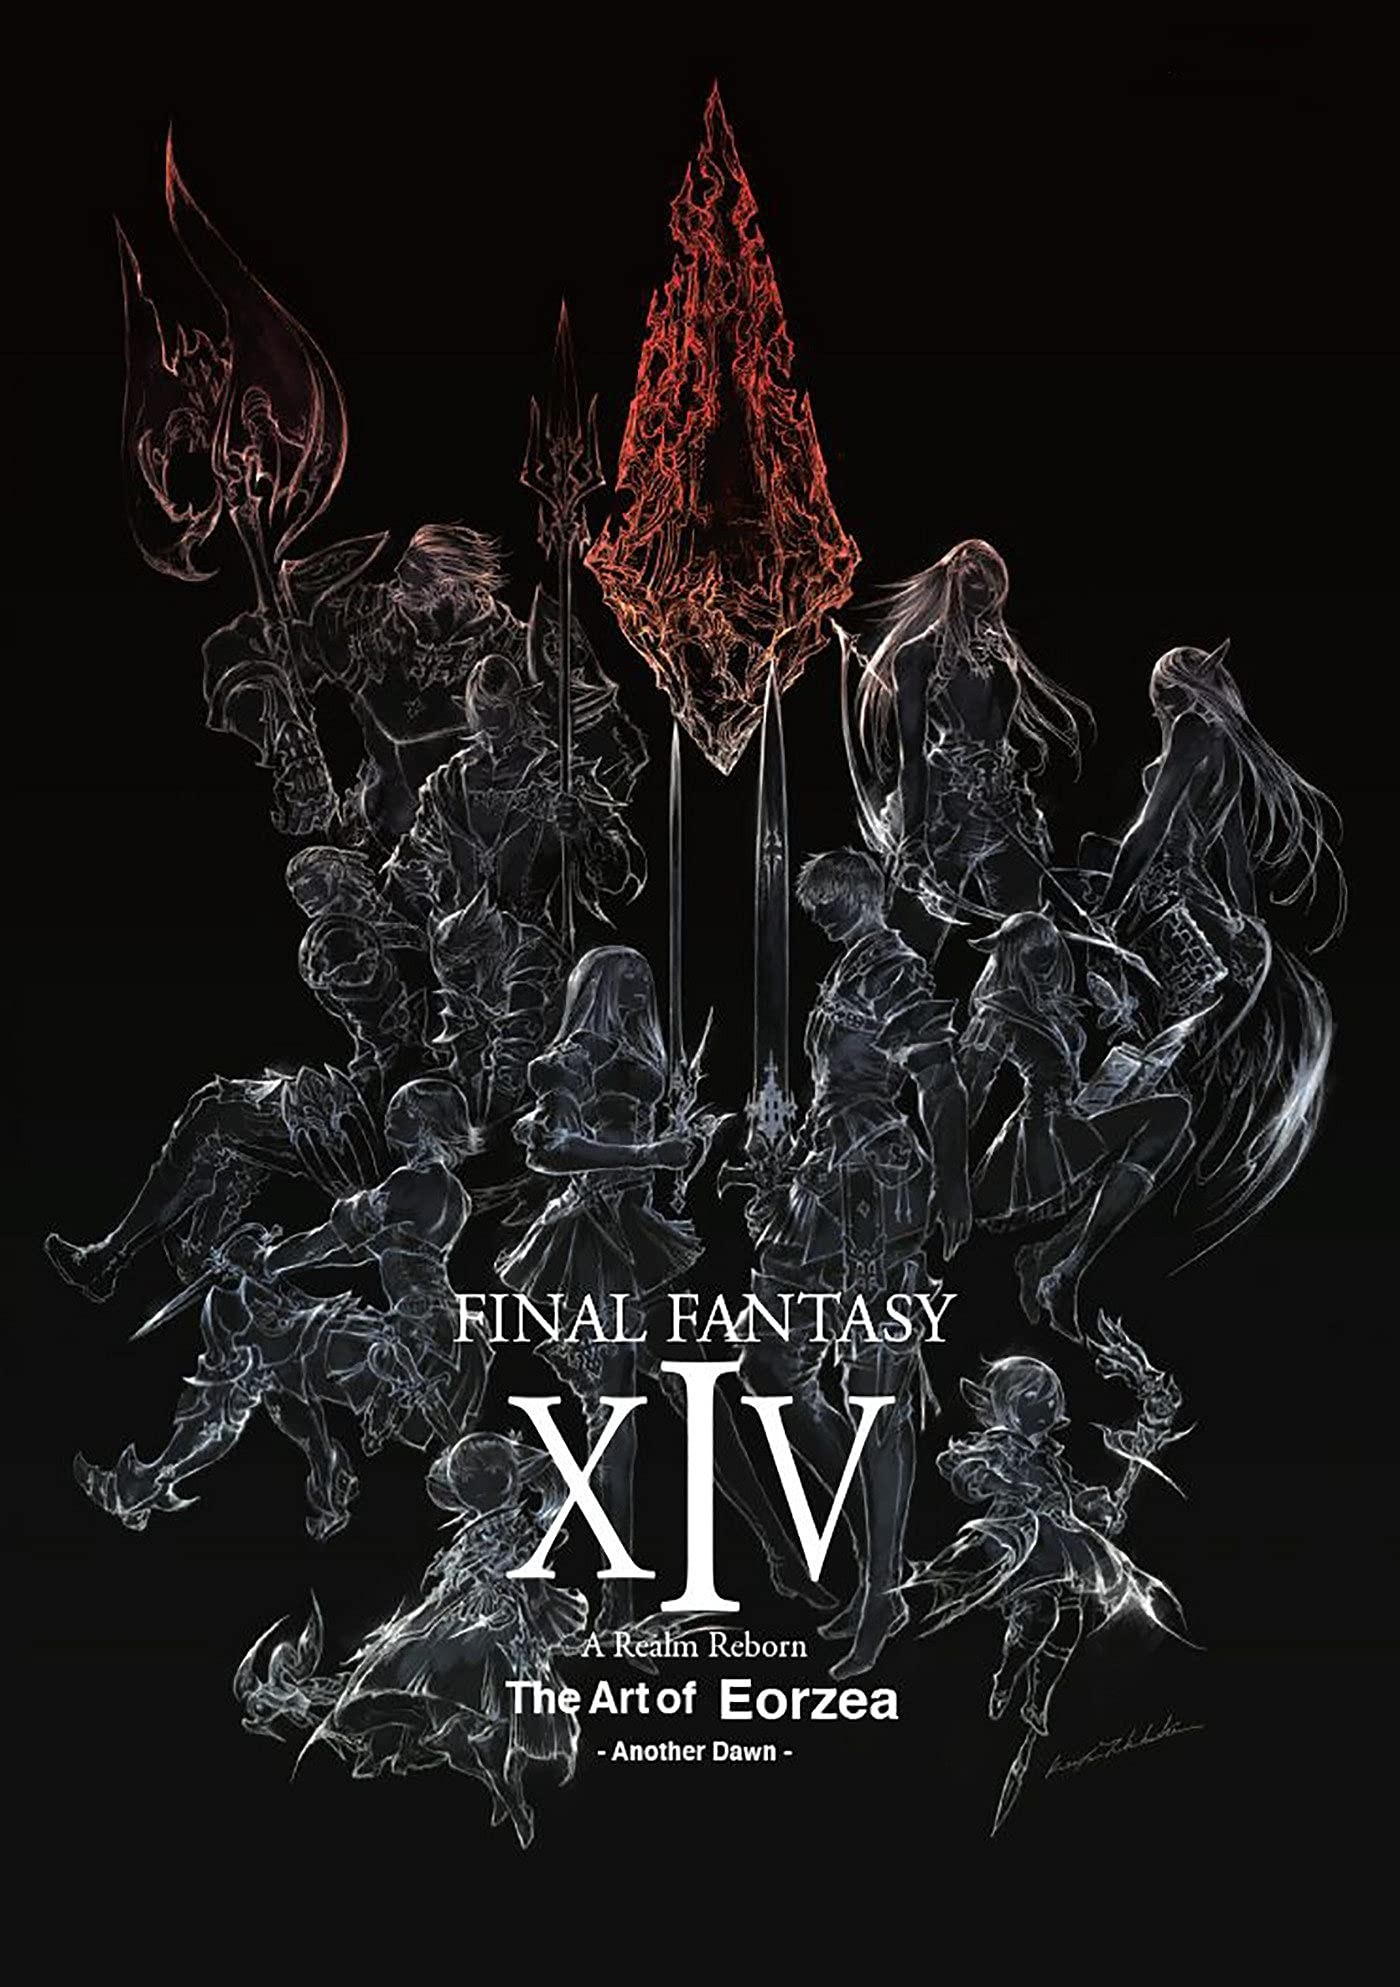 Final Fantasy XIV: A REALM REBORN The Art of Eorzea - Another Dawn - Art Book